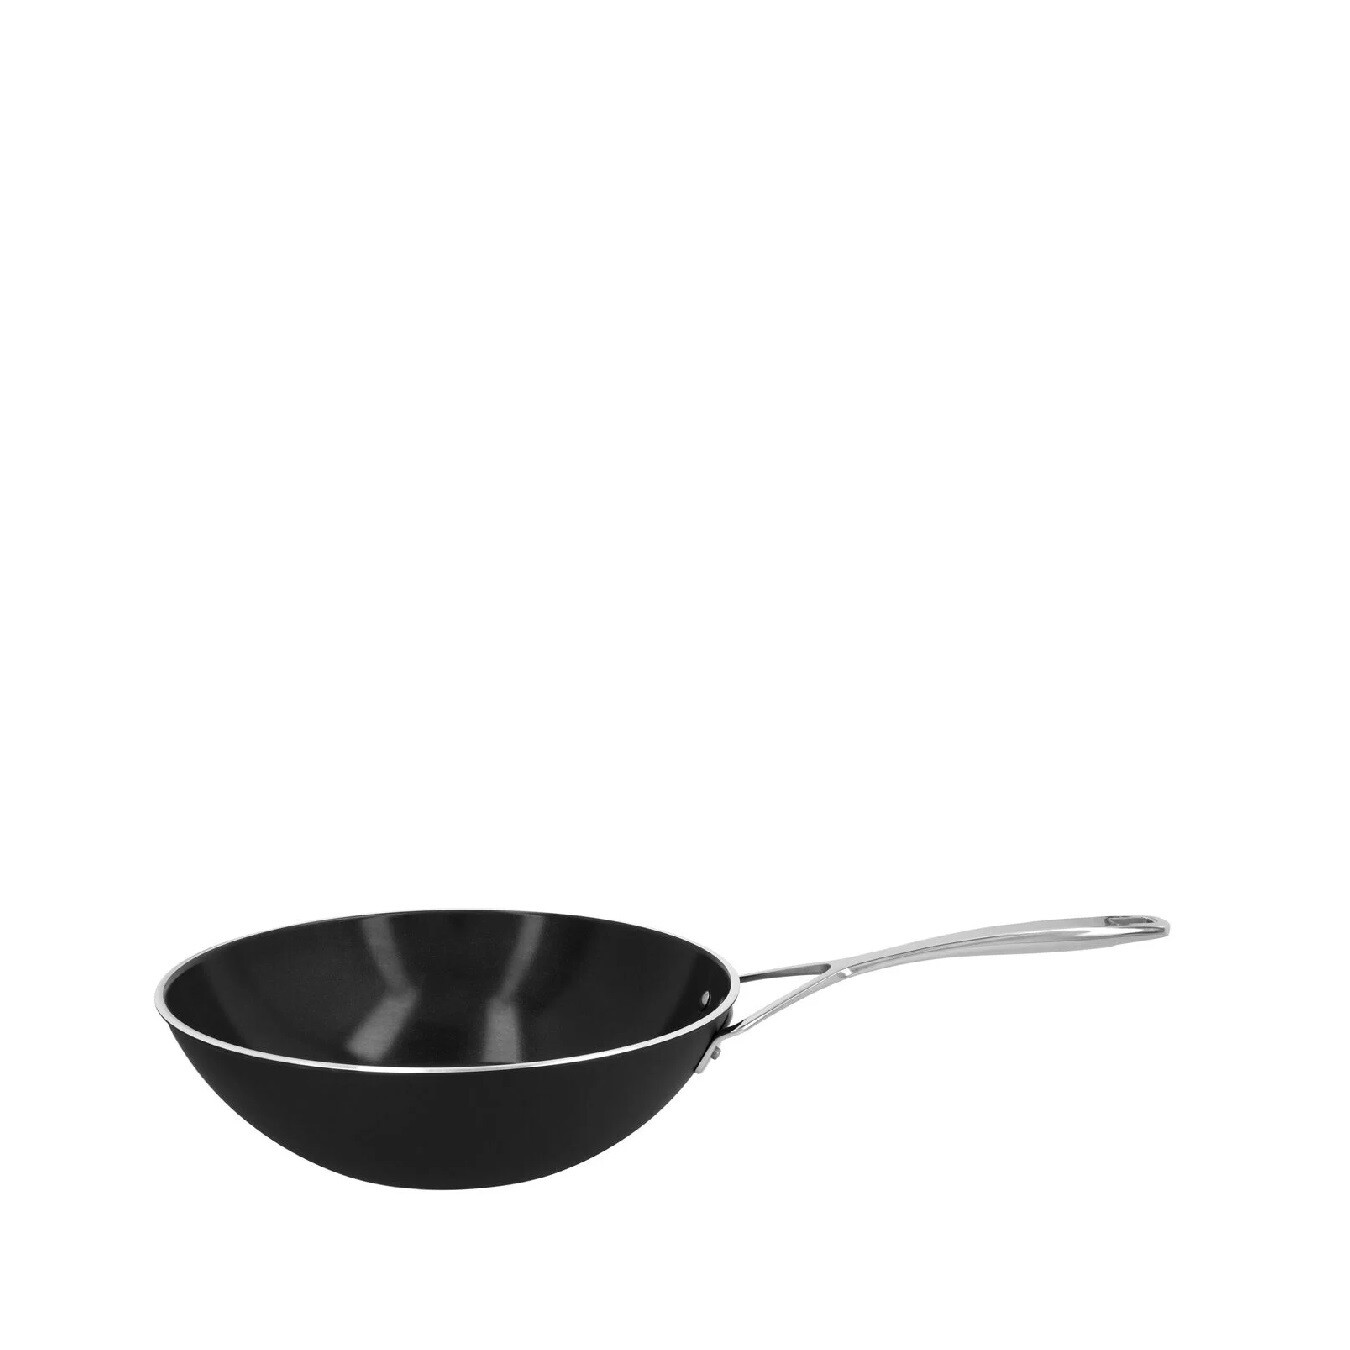 DEMEYERE 'alu pro 5 ceraforce' keramische antikleef wok 30cm  PROMO 105,00 -20%